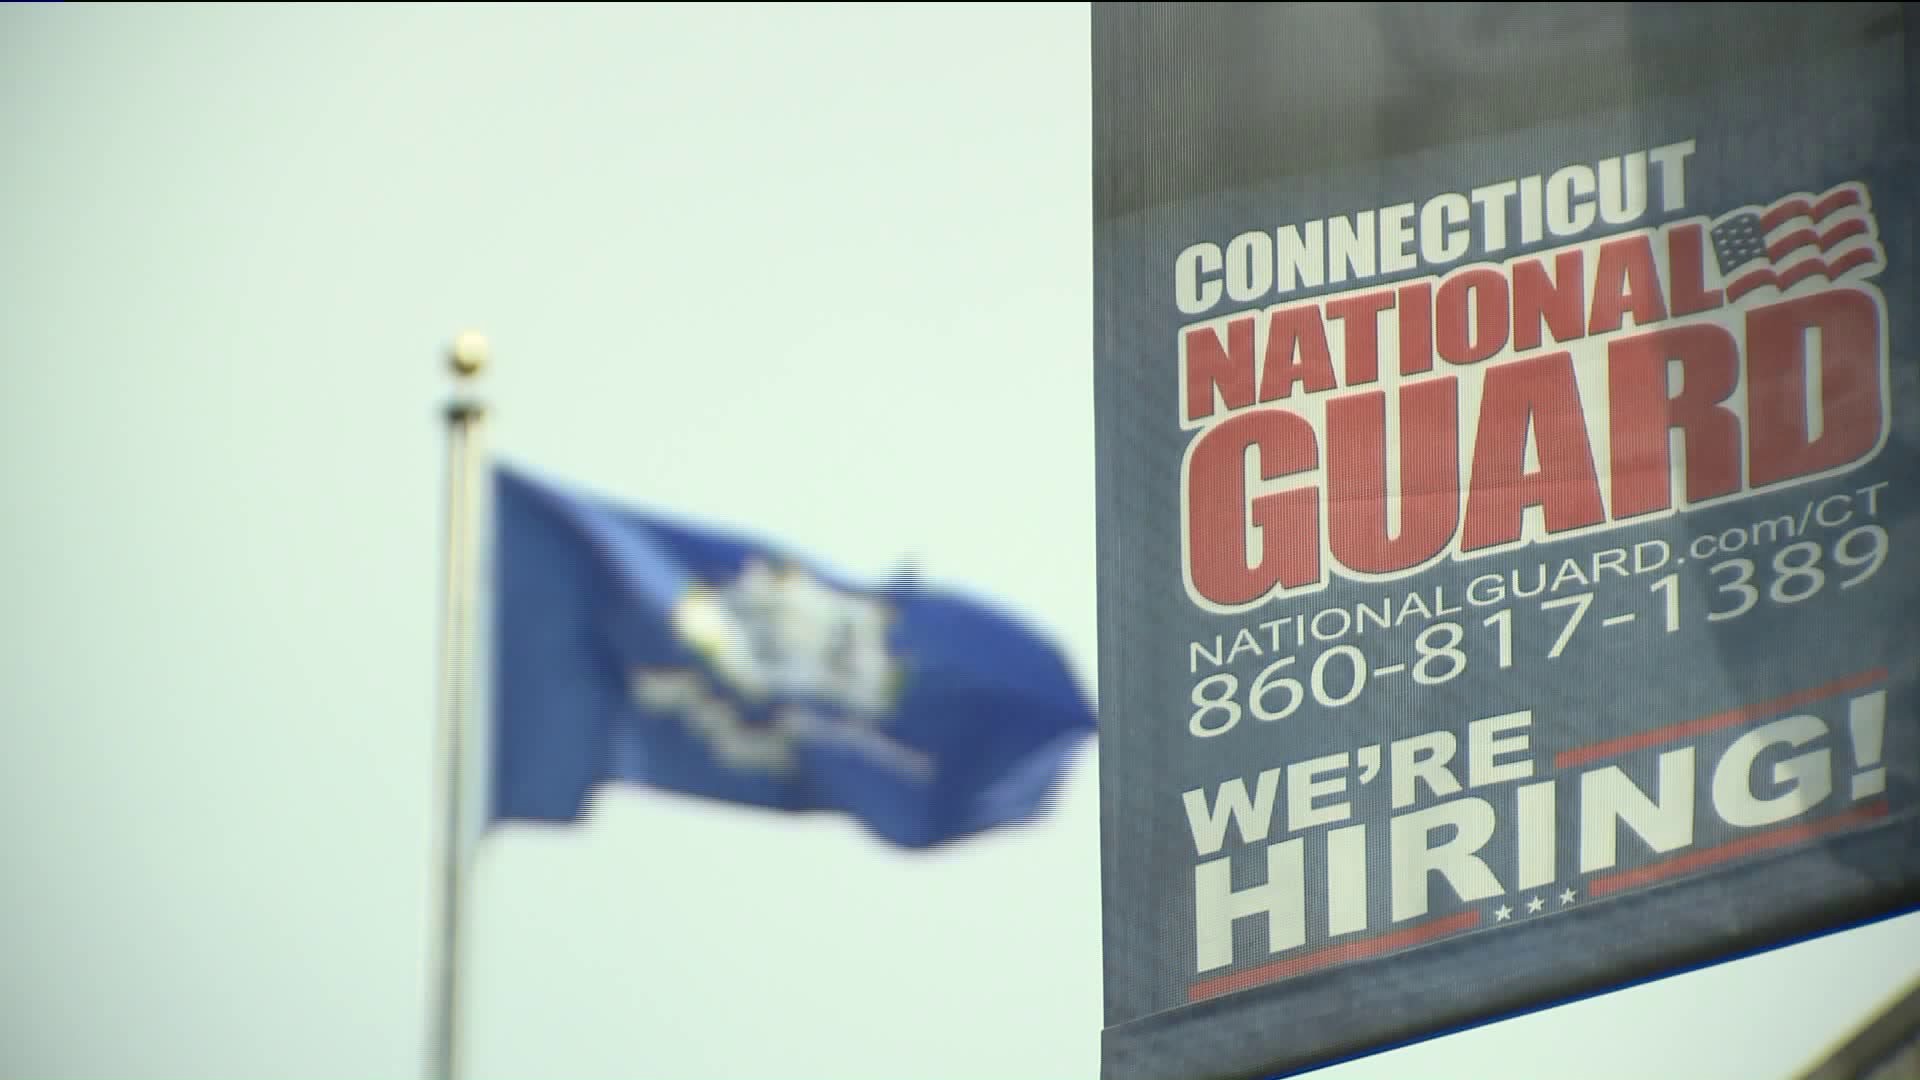 National Guard Foundation